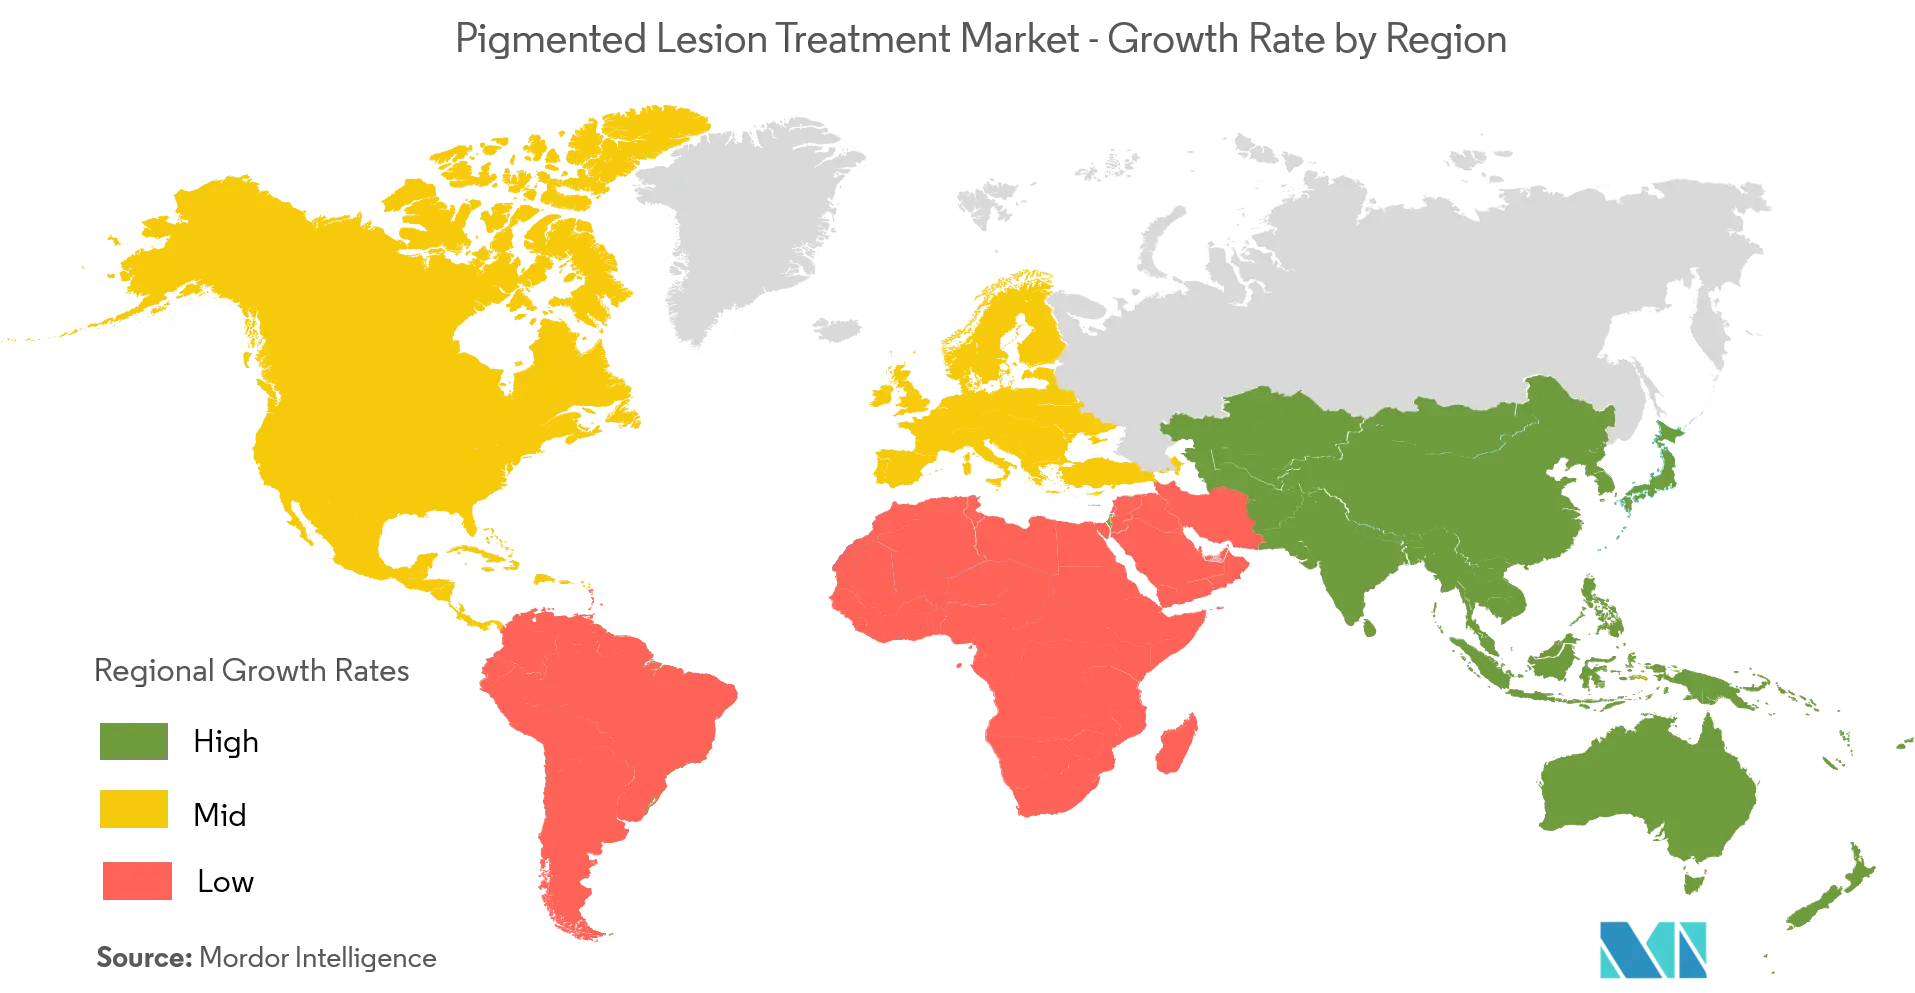 pigmented lesion treatment market report